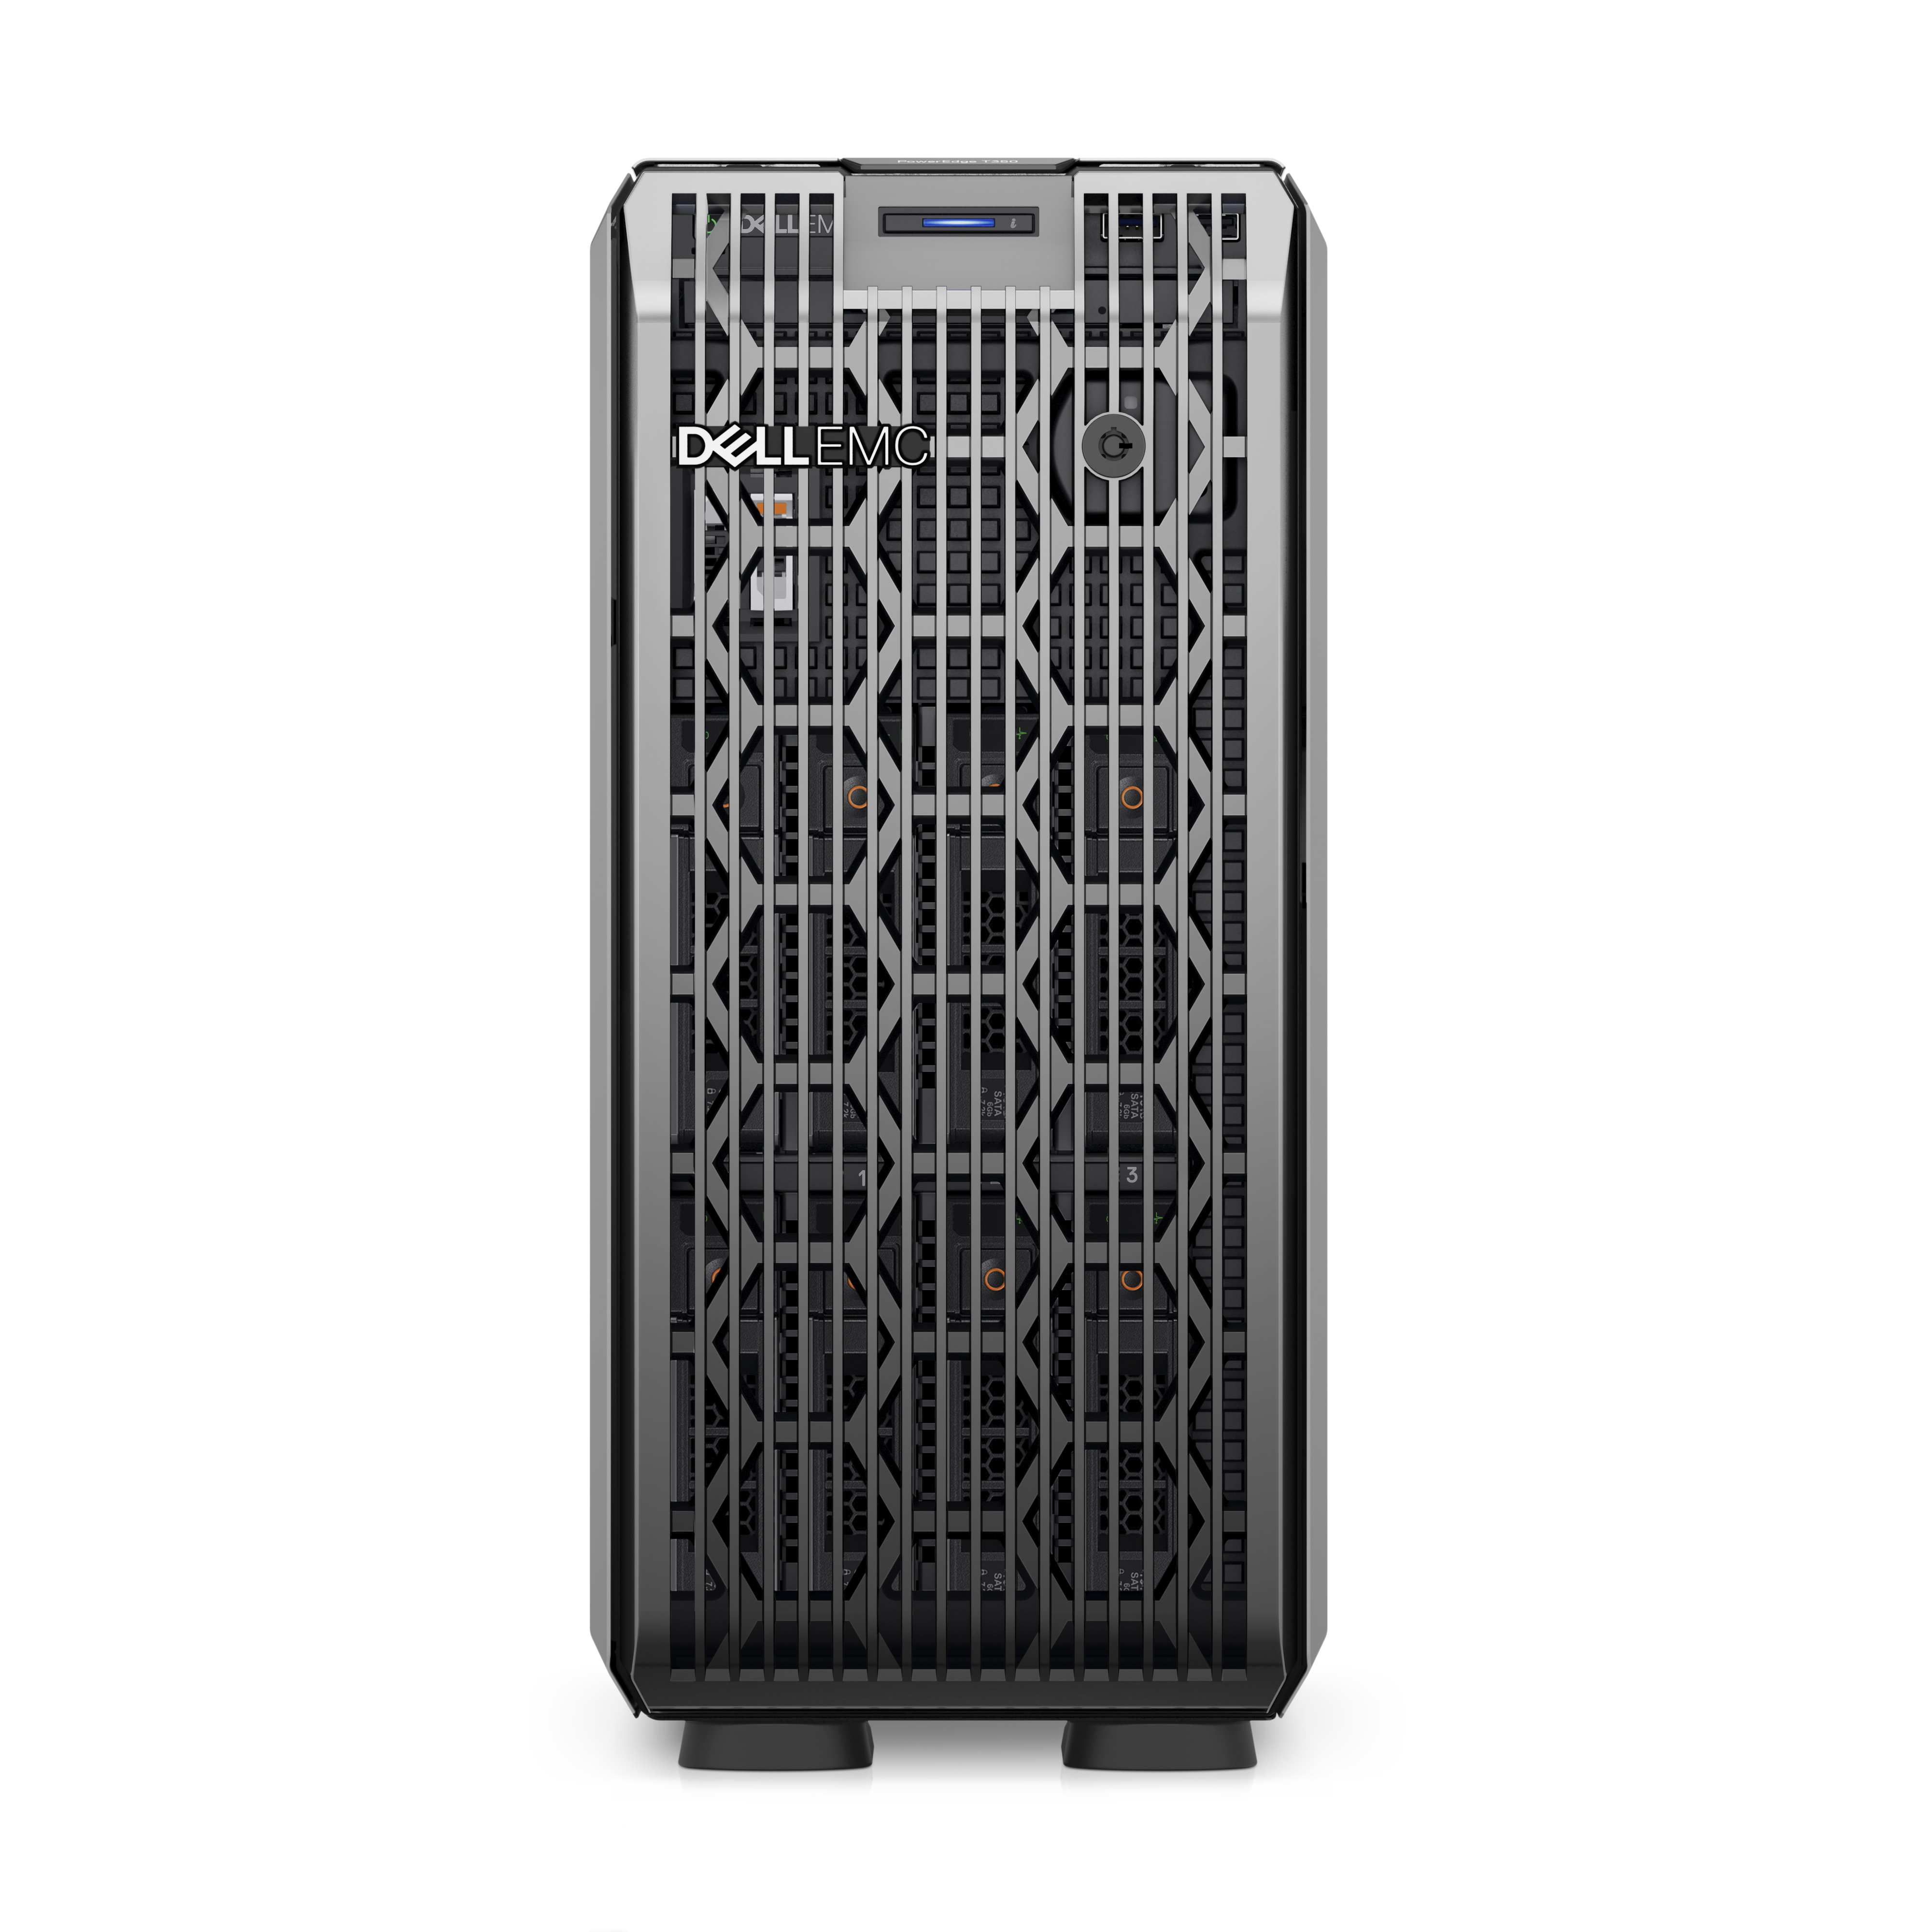 Dell EMC PowerEdge T350 - Server - Tower - 1-way - 1 X Xeon E-2336 / 2.9 GHz - RAM 16 GB - SAS - Hot-swap 3.5" Bay(s) - HDD 600 GB - Matrox G200 - GigE - No OS - Monitor: None - Black - BTP - - C2000